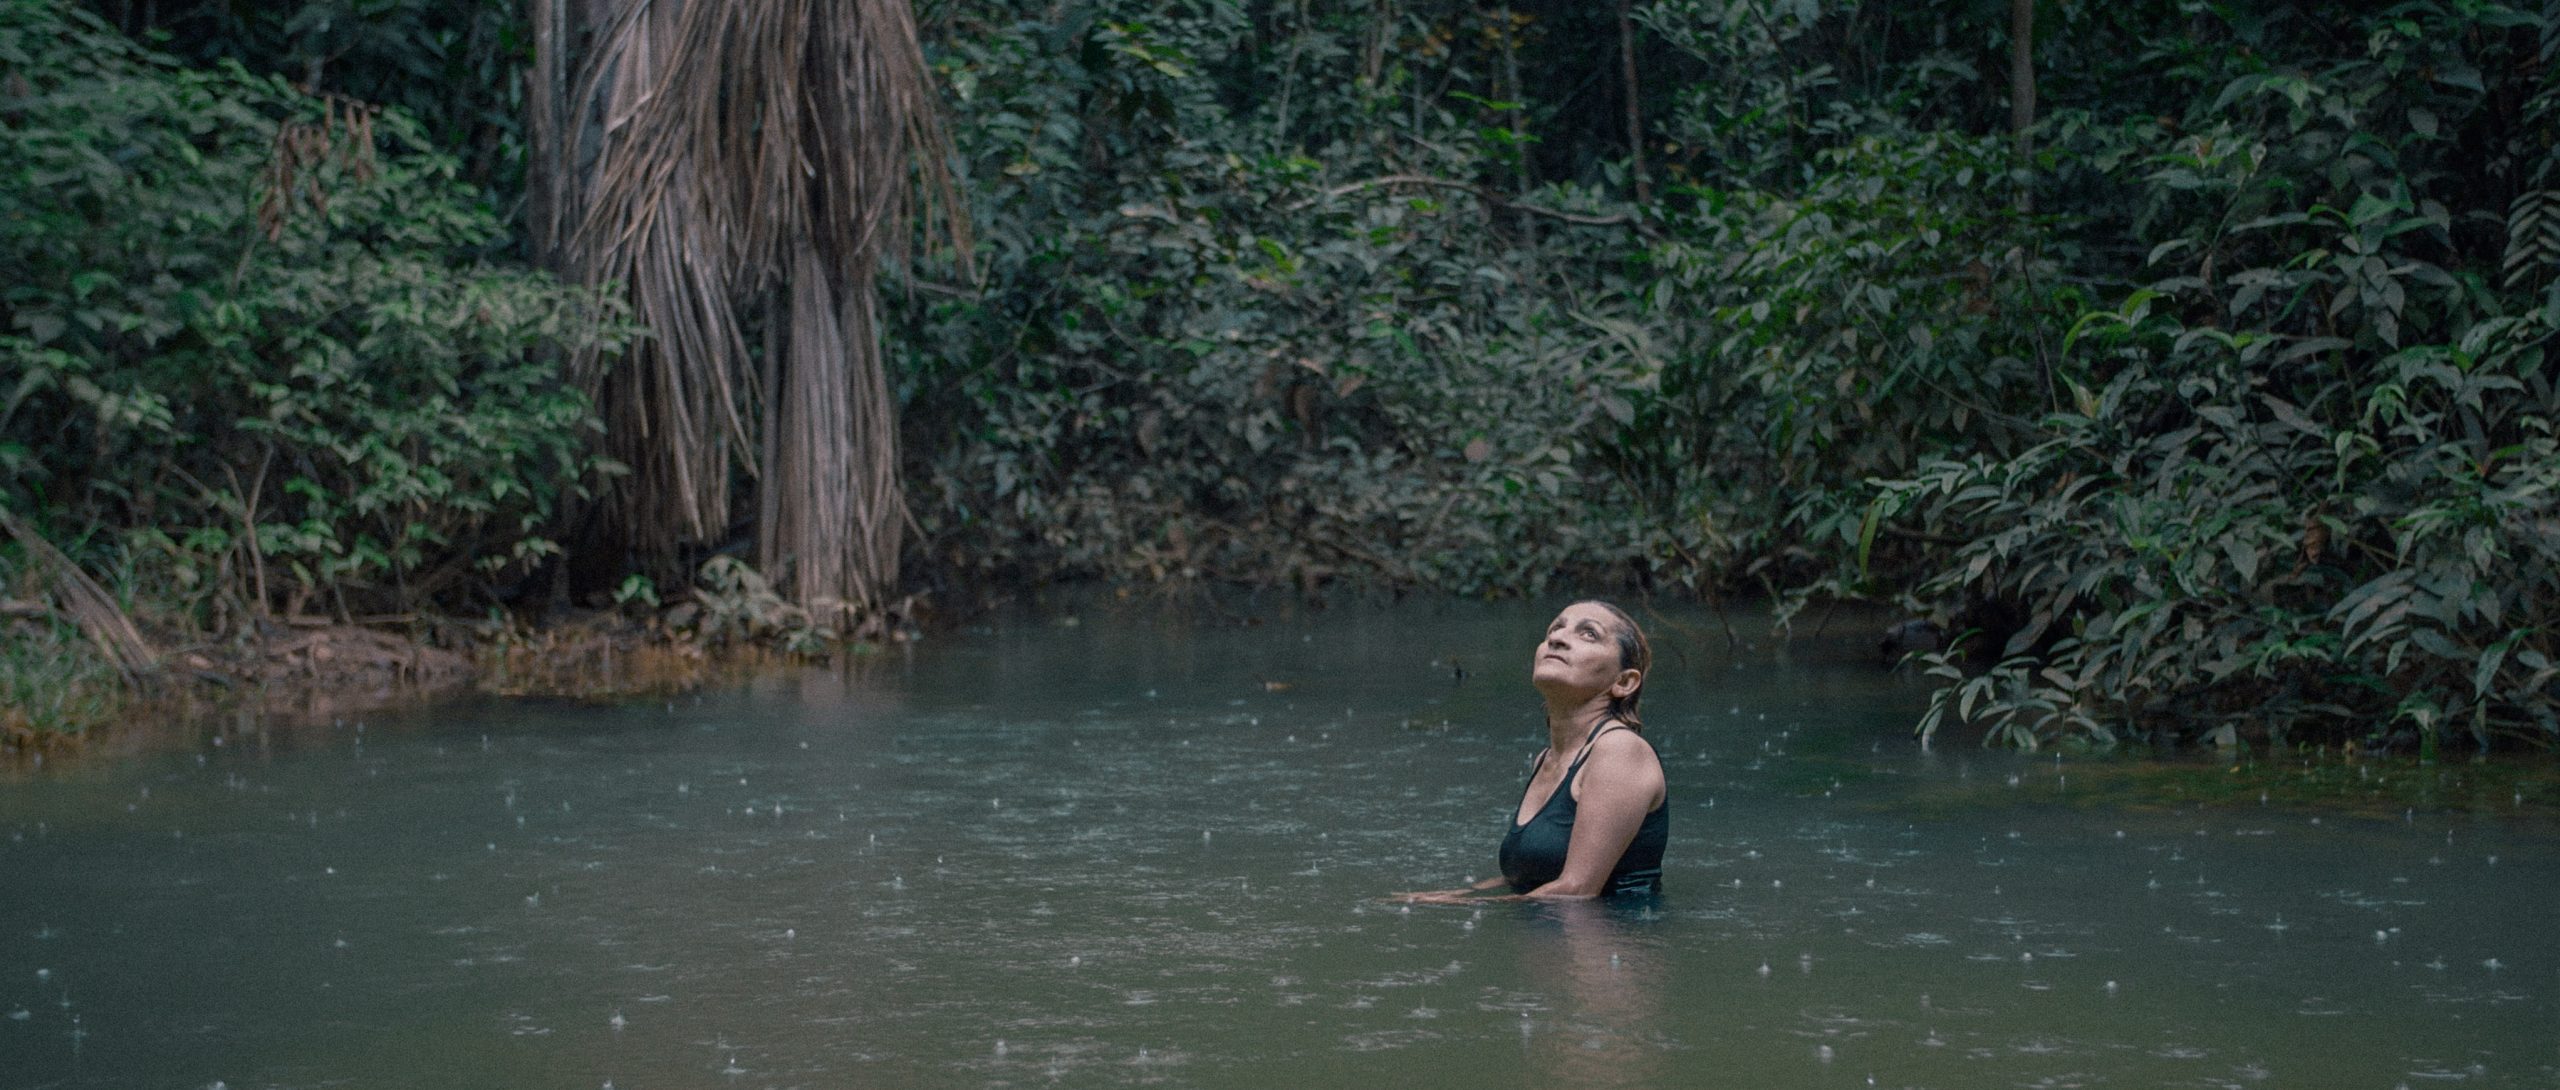 Neidinha Bandeira, an environmental activist, bathes in a river in the Amazon rainforest. (Credit: Alex Pritz/Amazon Land Documentary)